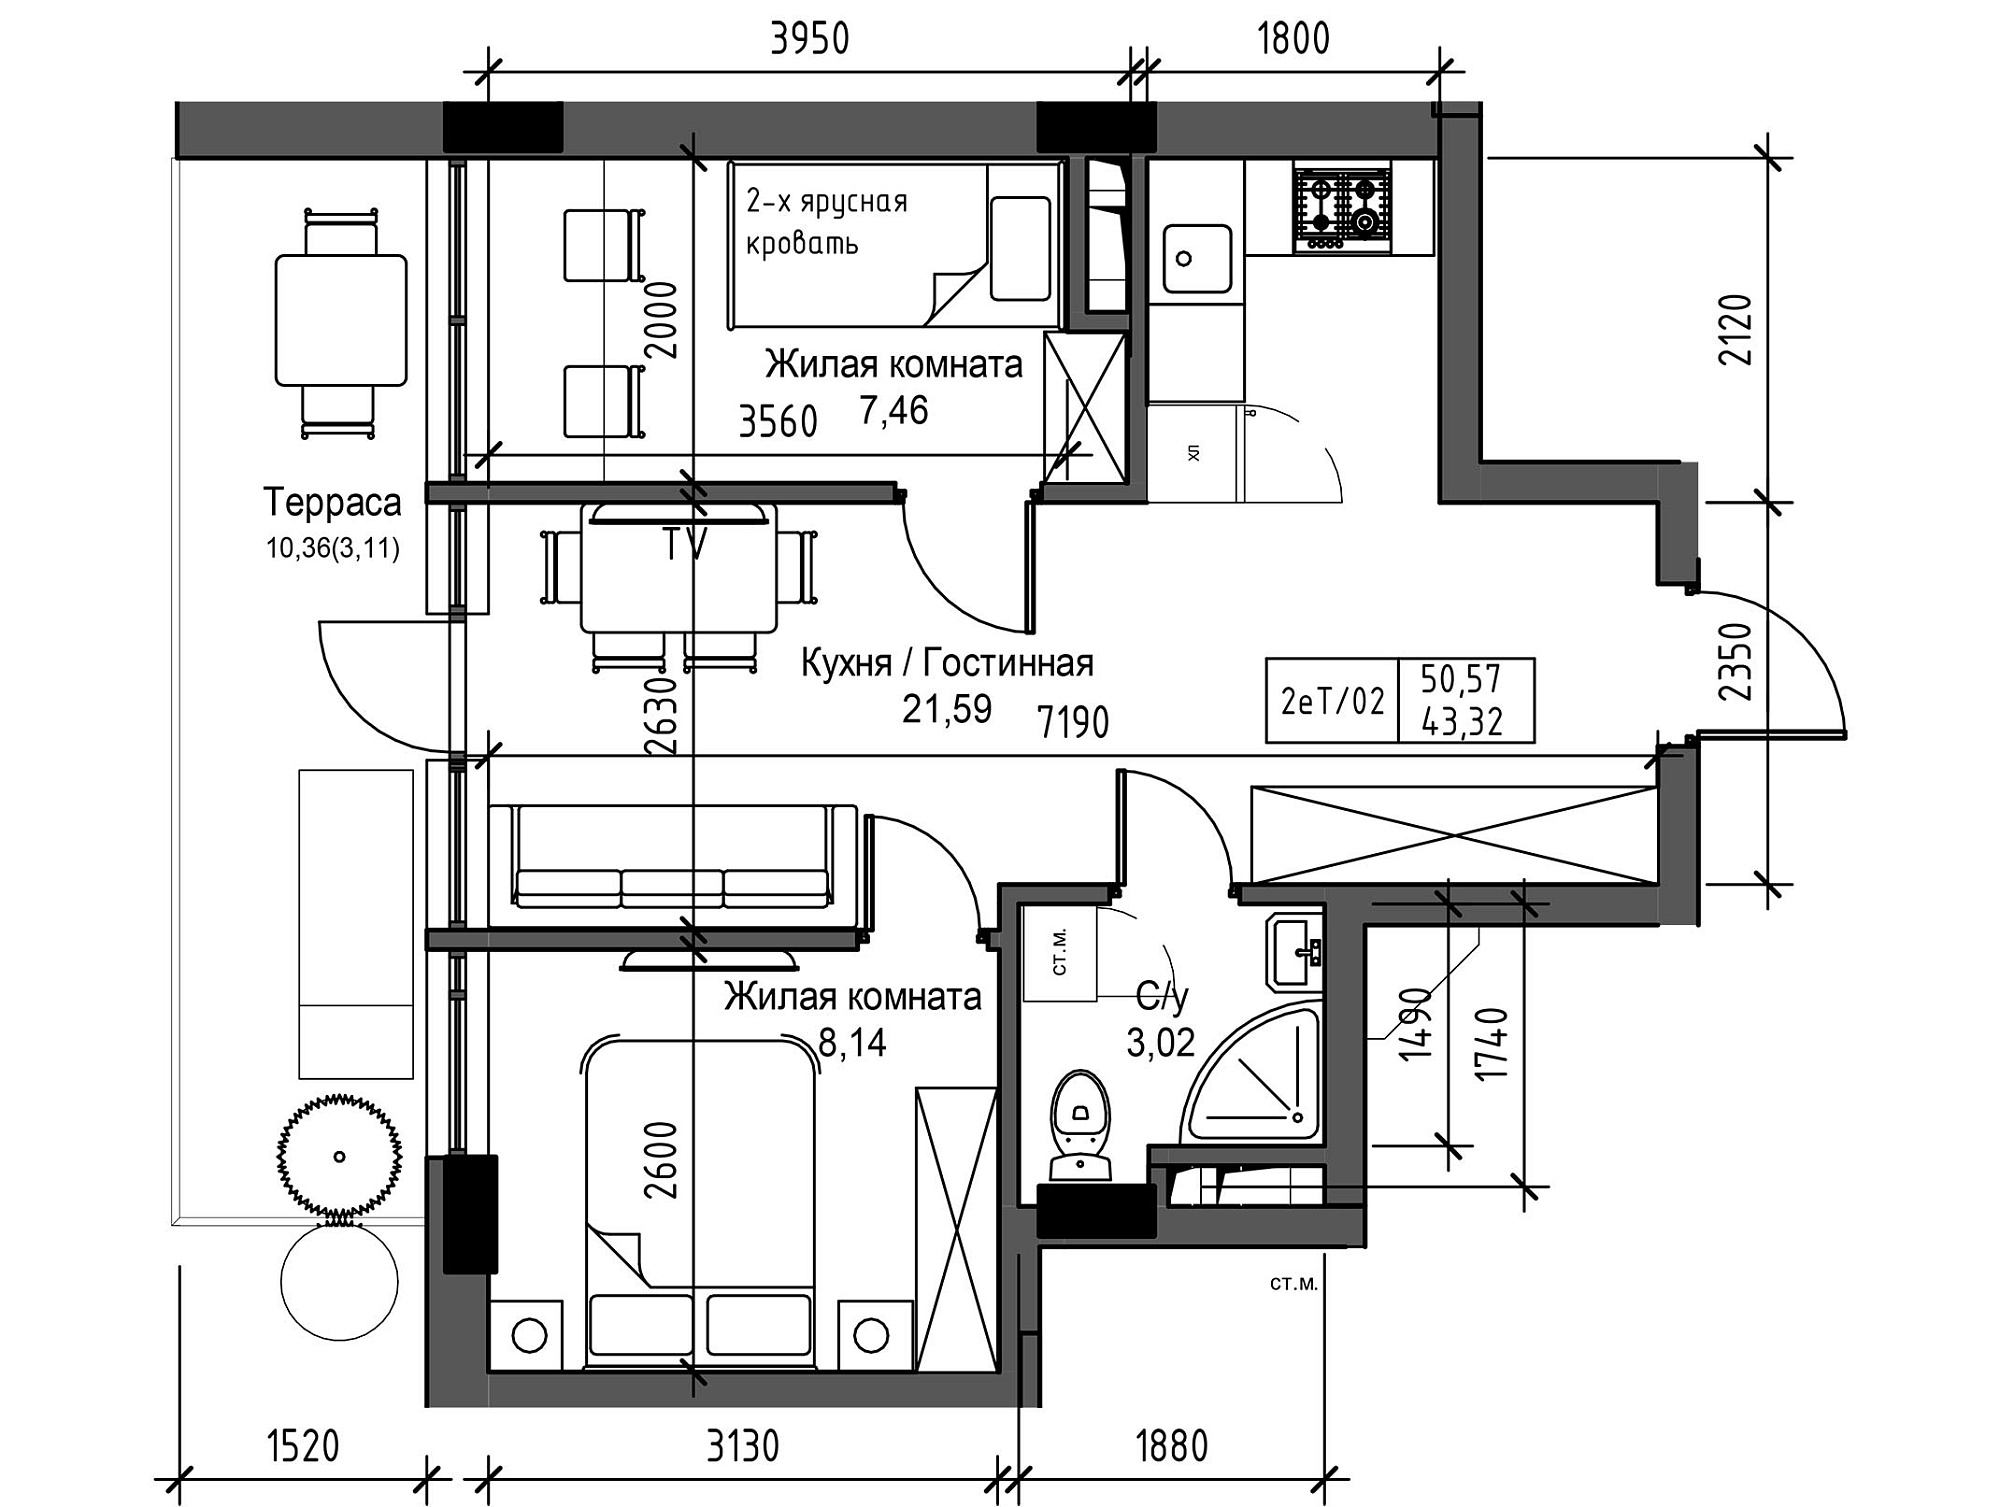 Планування 2-к квартира площею 43.32м2, UM-003-09/0098.